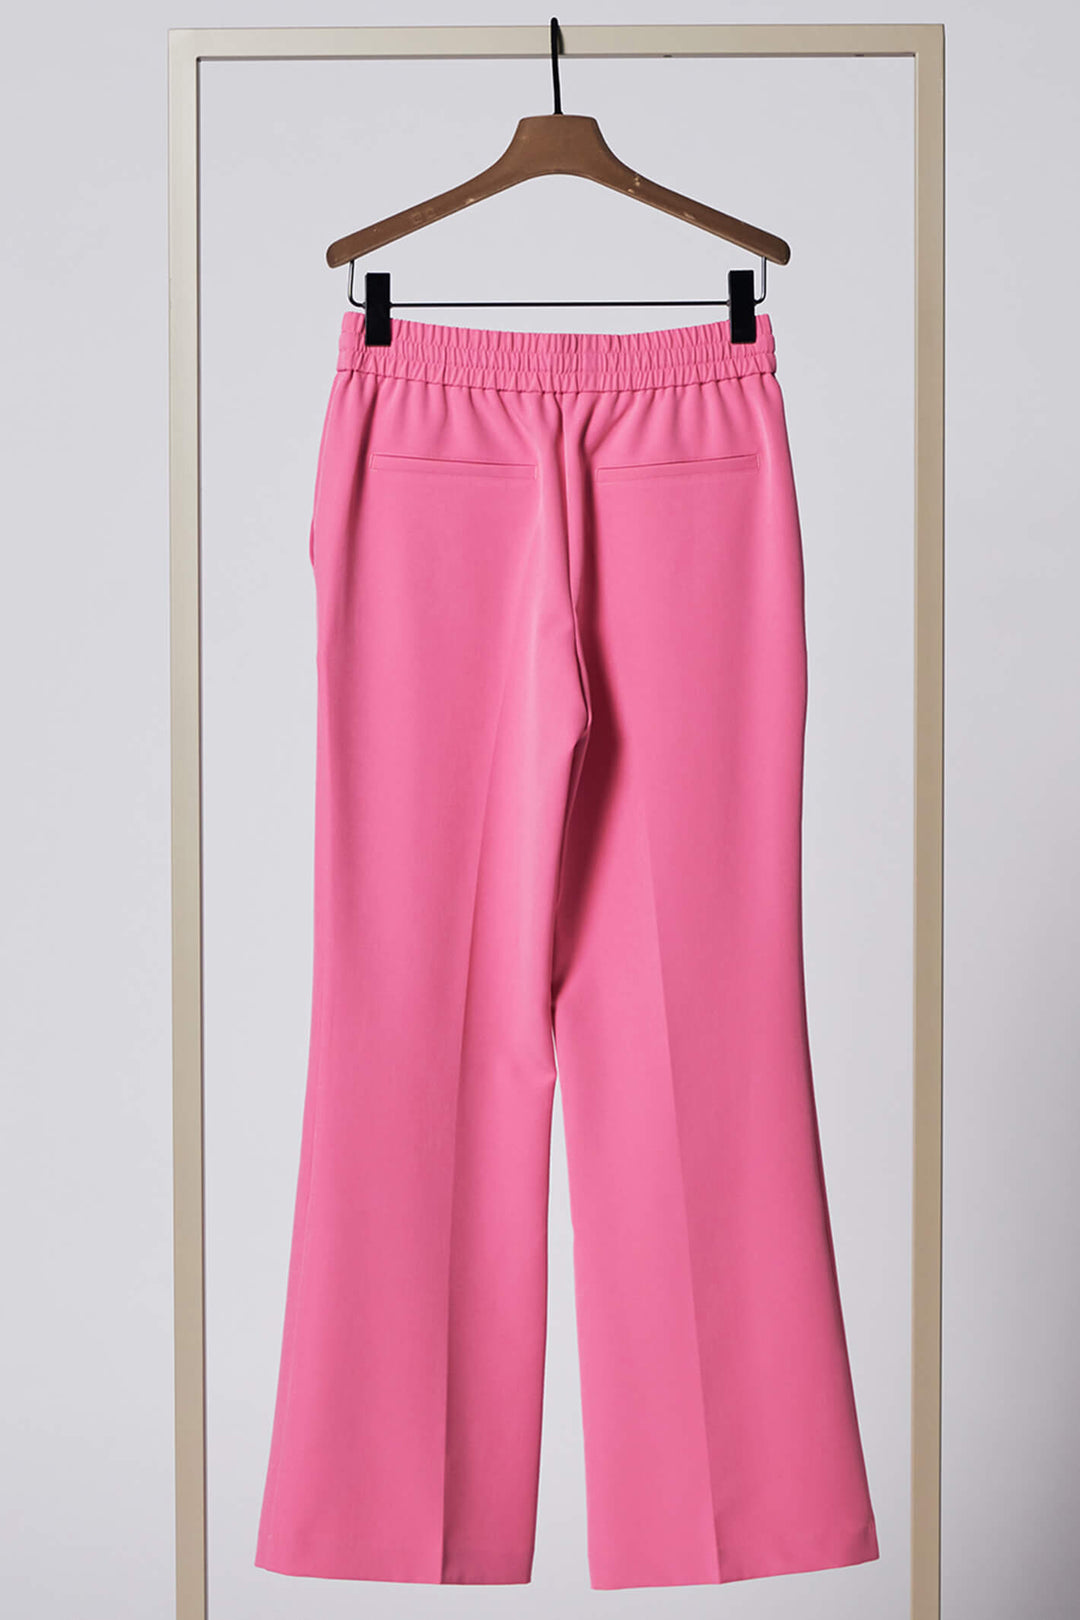 Herzen's Angelegenheit 6506 Coral Drawstring Trousers - Olivia Grace Fashion